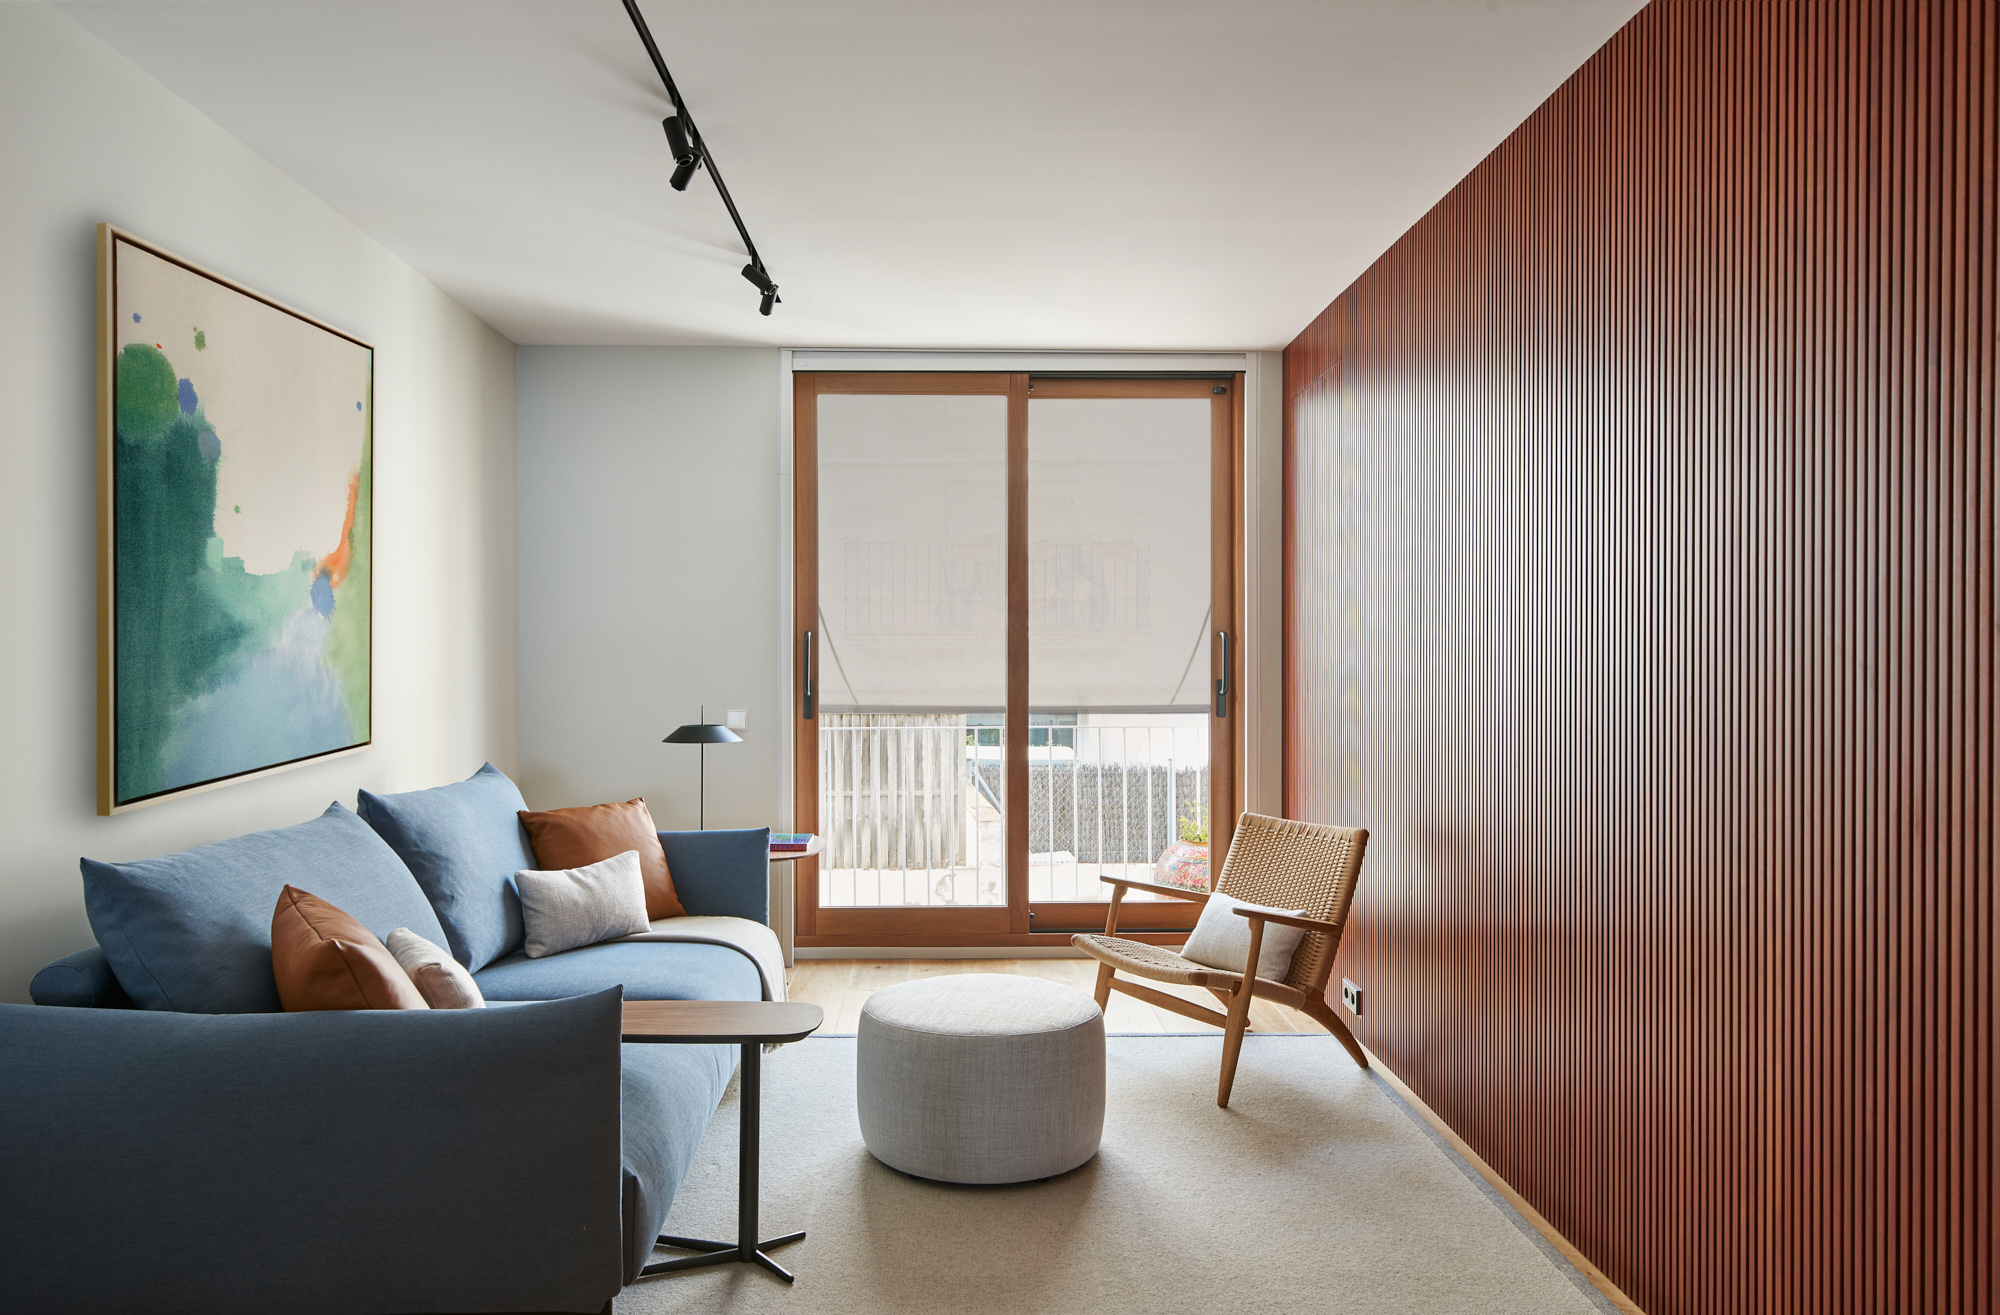 a modern living room design